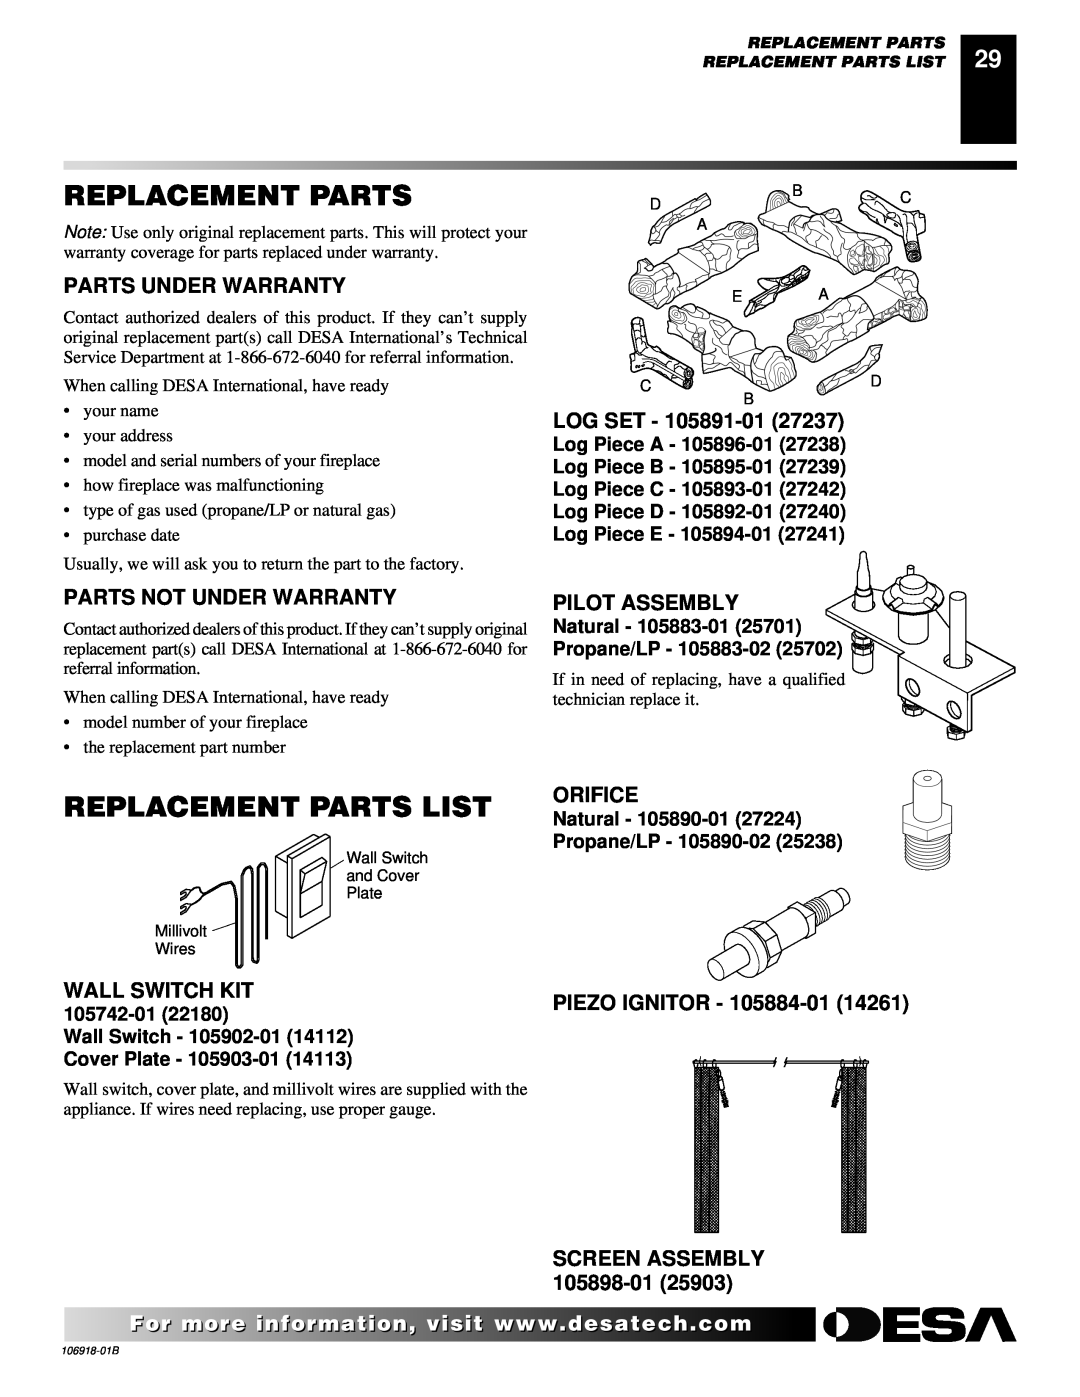 Desa VDDVF36STN/STP Replacement Parts List, Parts Under Warranty, Parts Not Under Warranty, Log Set, Pilot Assembly 